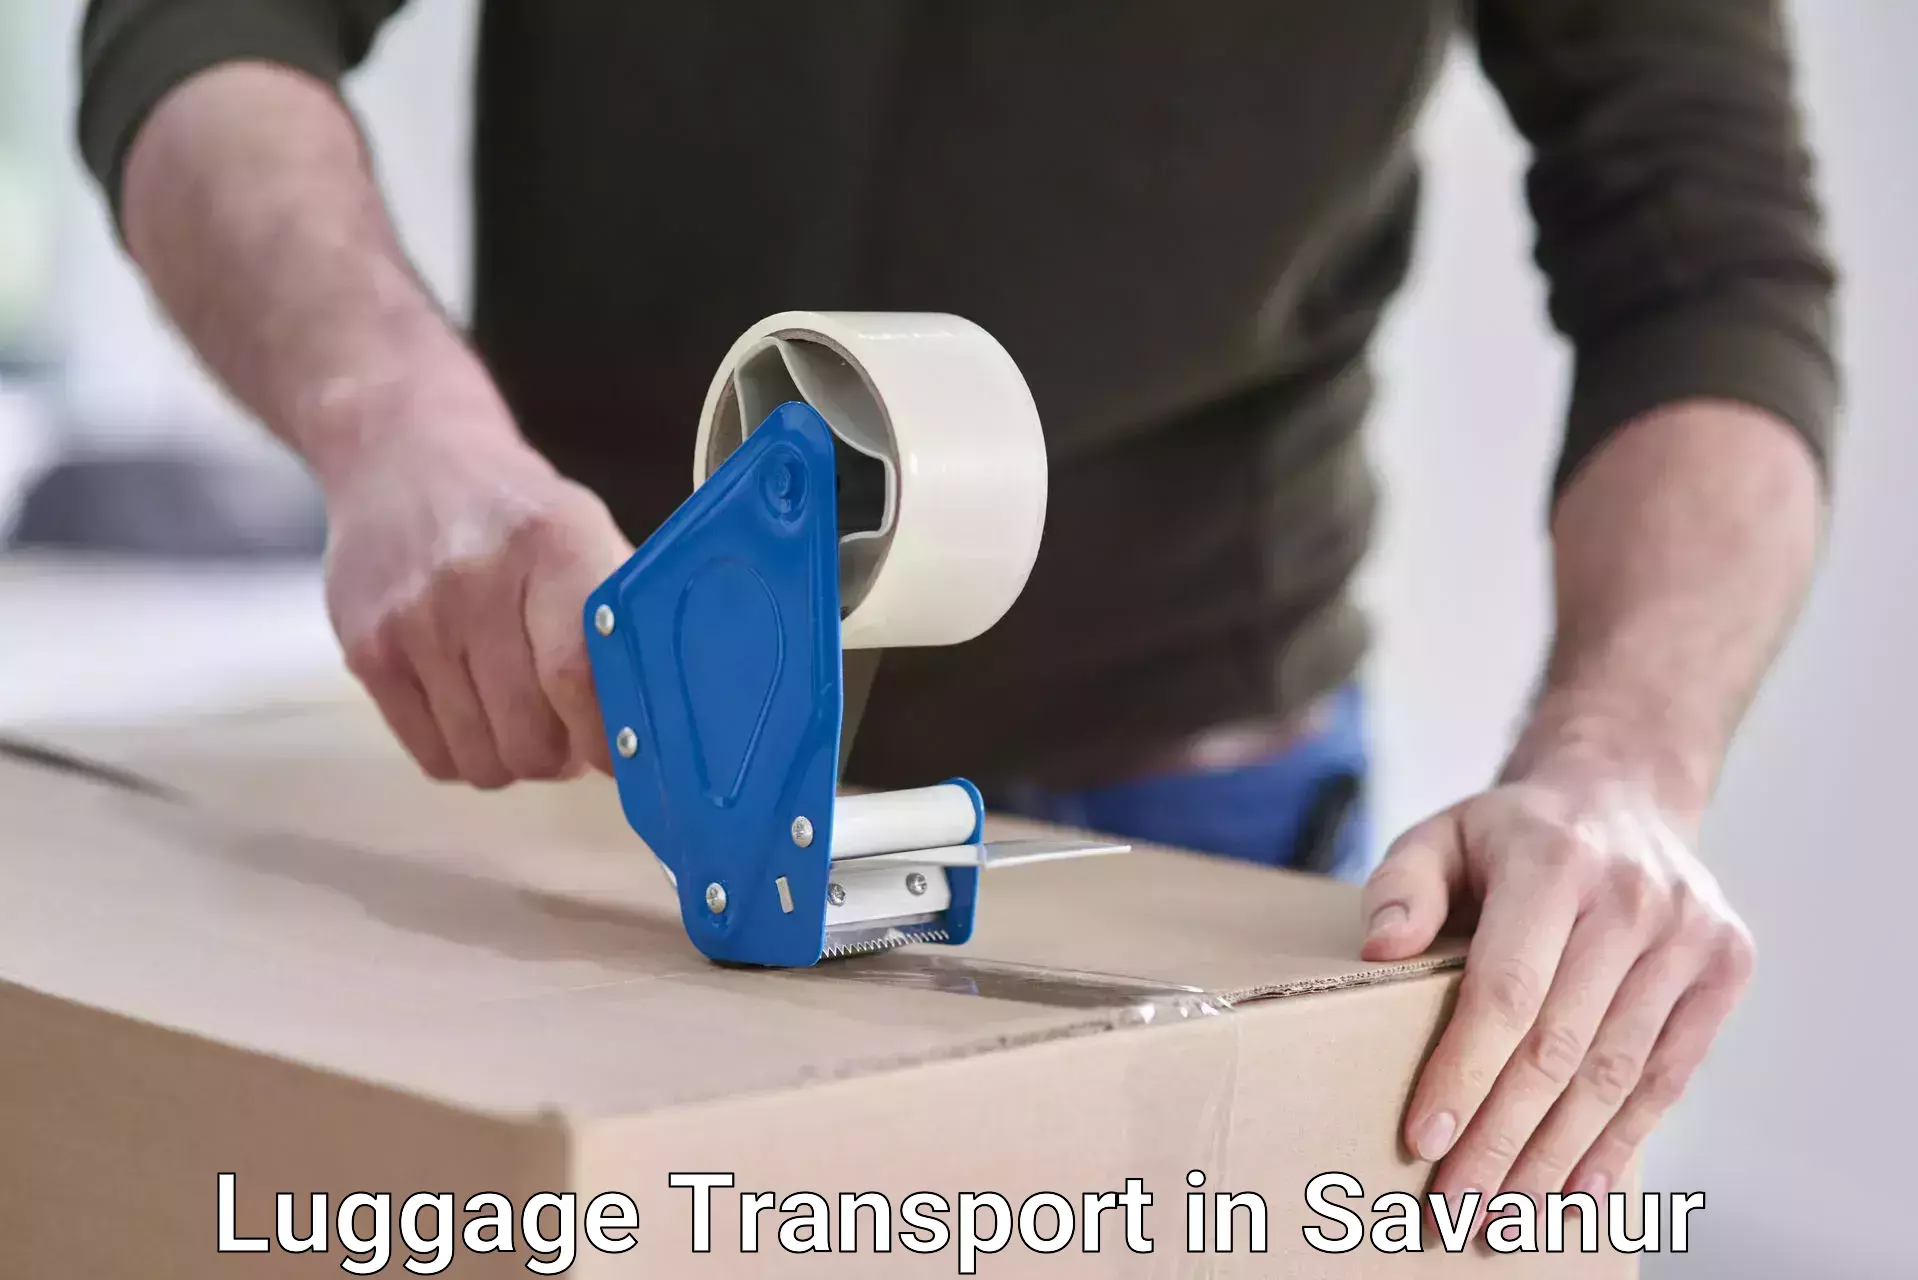 Hassle-free luggage shipping in Savanur